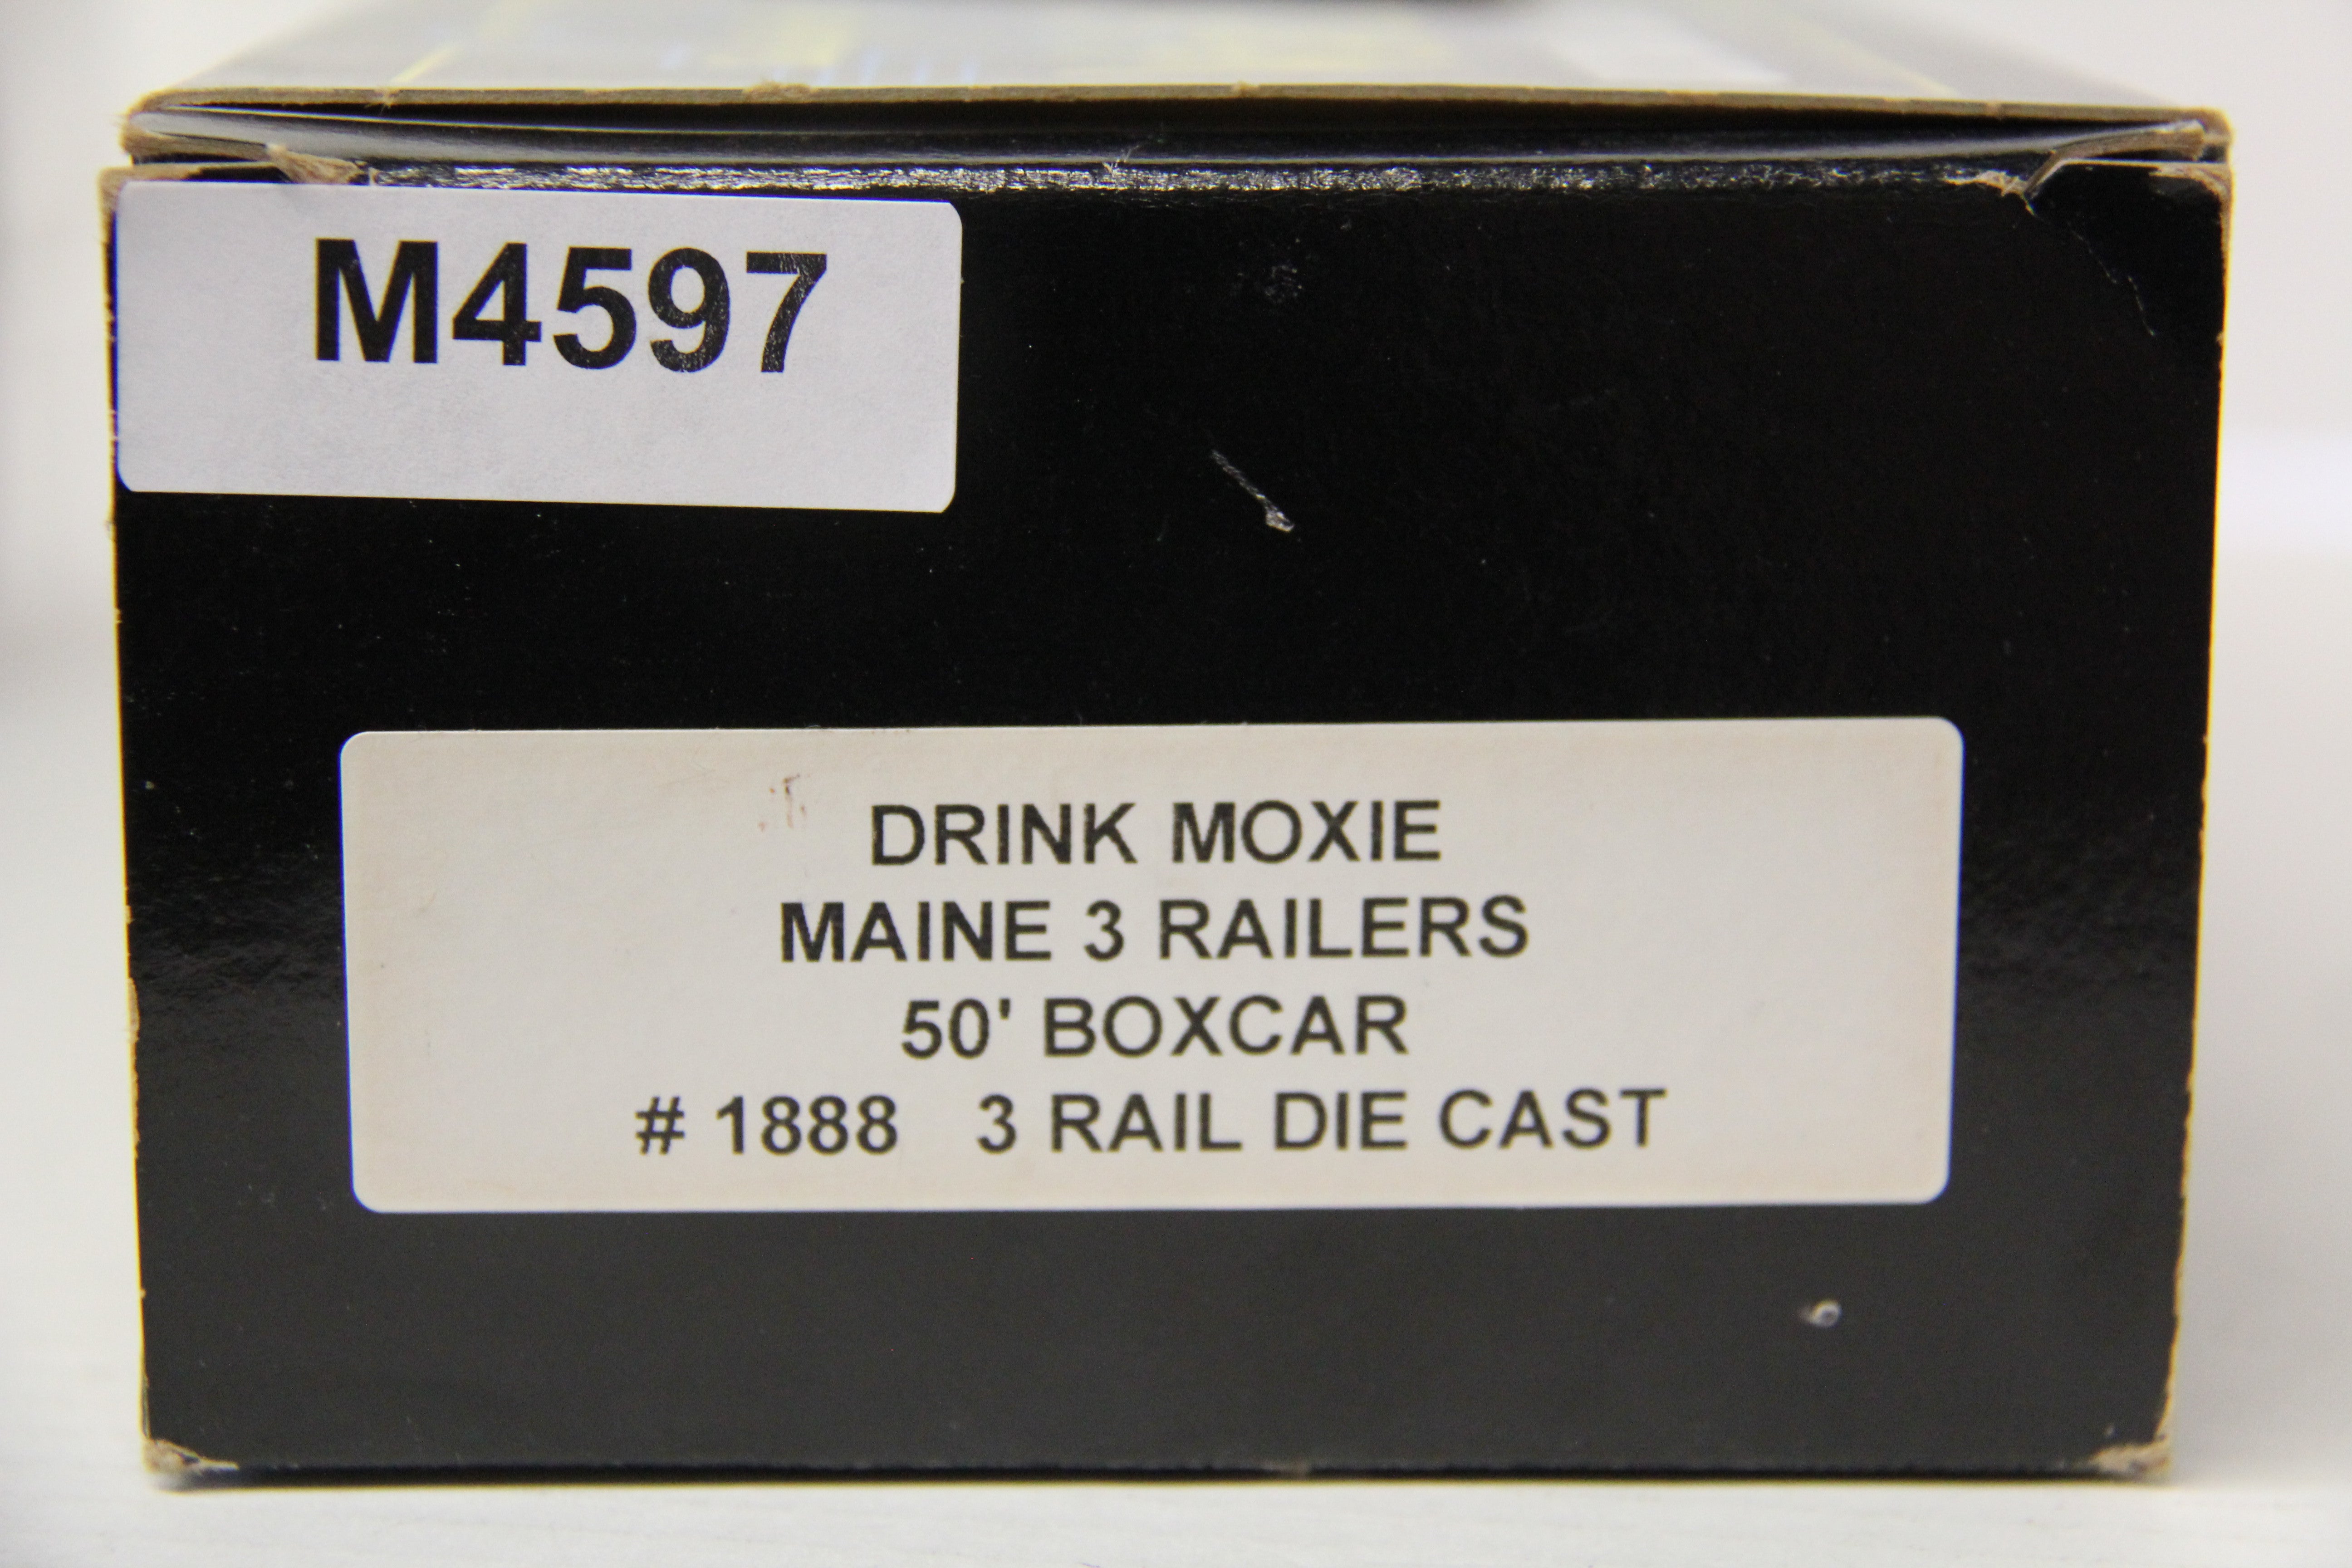 Weaver Drink Moxie Maine 3 Railers 50' Boxcar 3 Rail Die Cast #1888-Second hand-M4597